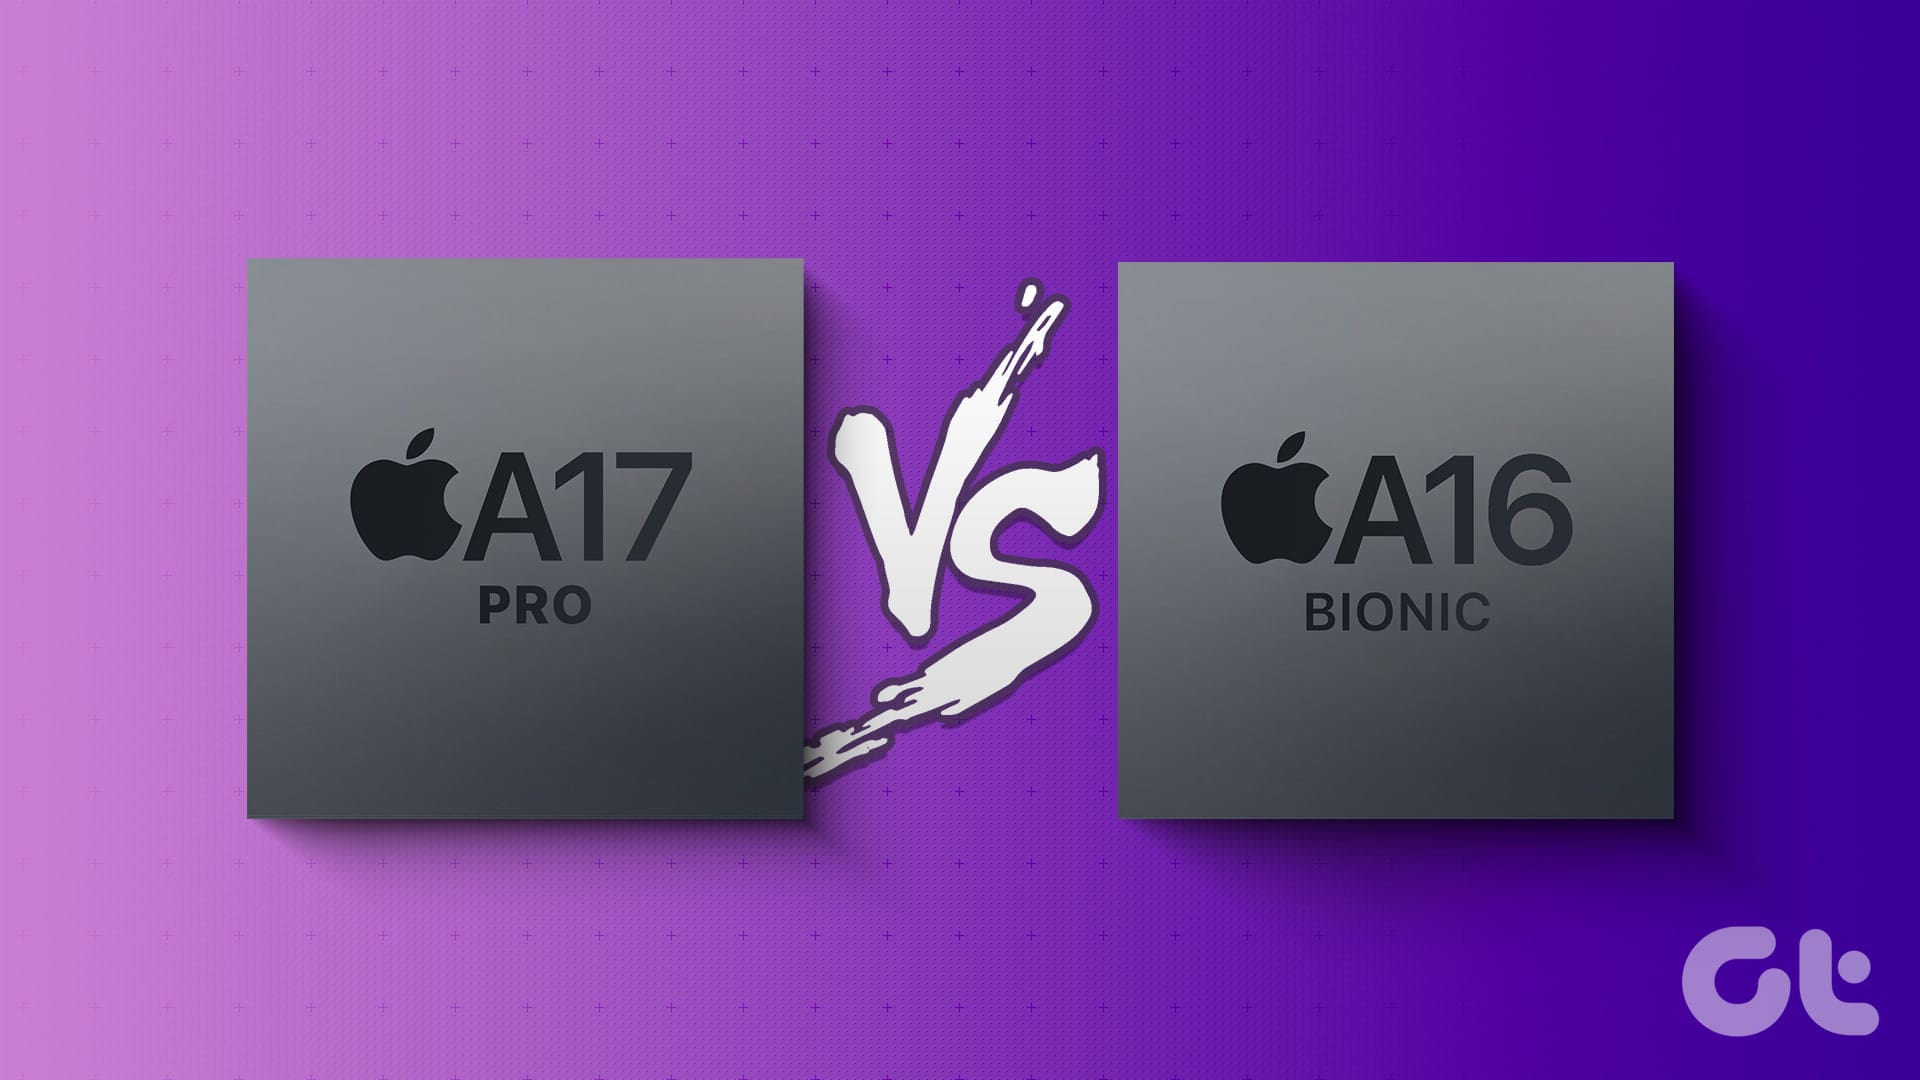 A17 Pro vs. A16 Bionic